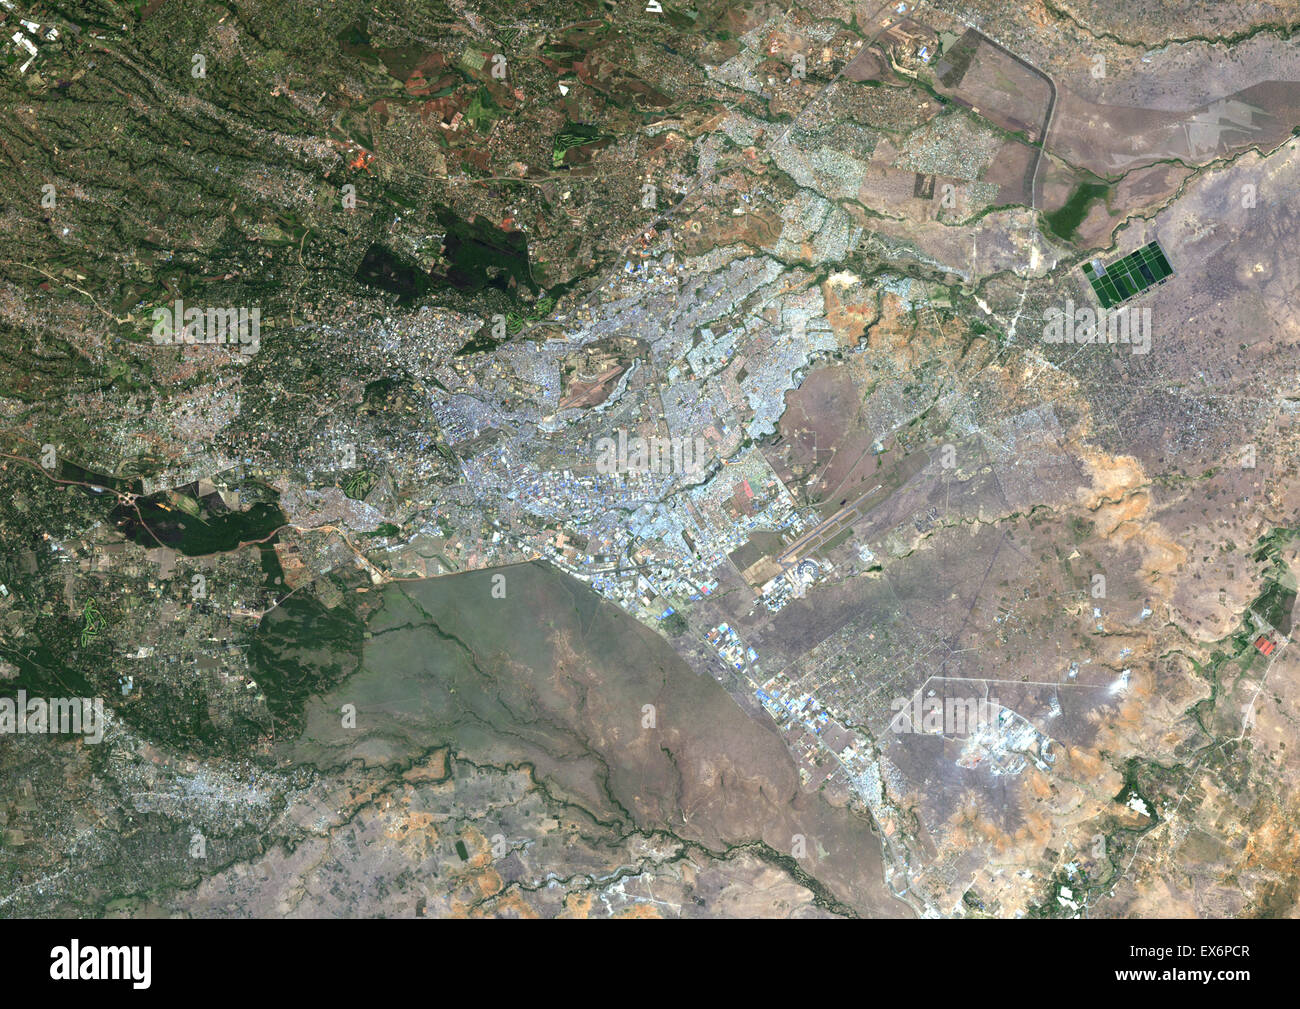 Colour satellite image of Nairobi, Kenya. Image taken on February 3, 2014 with Landsat 8 data. Stock Photo